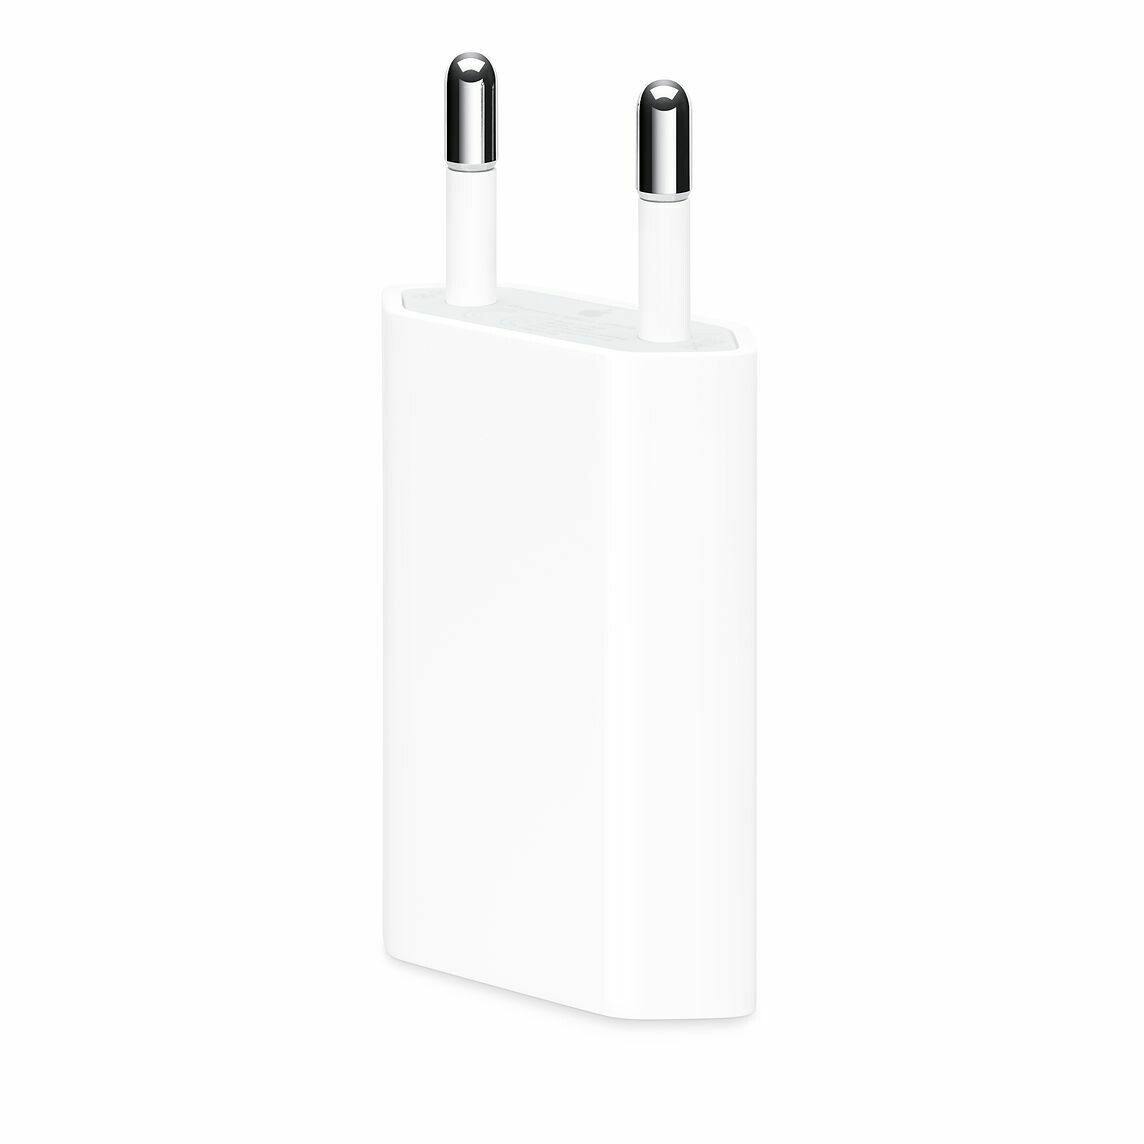 Apple USB Power Adapter 5W